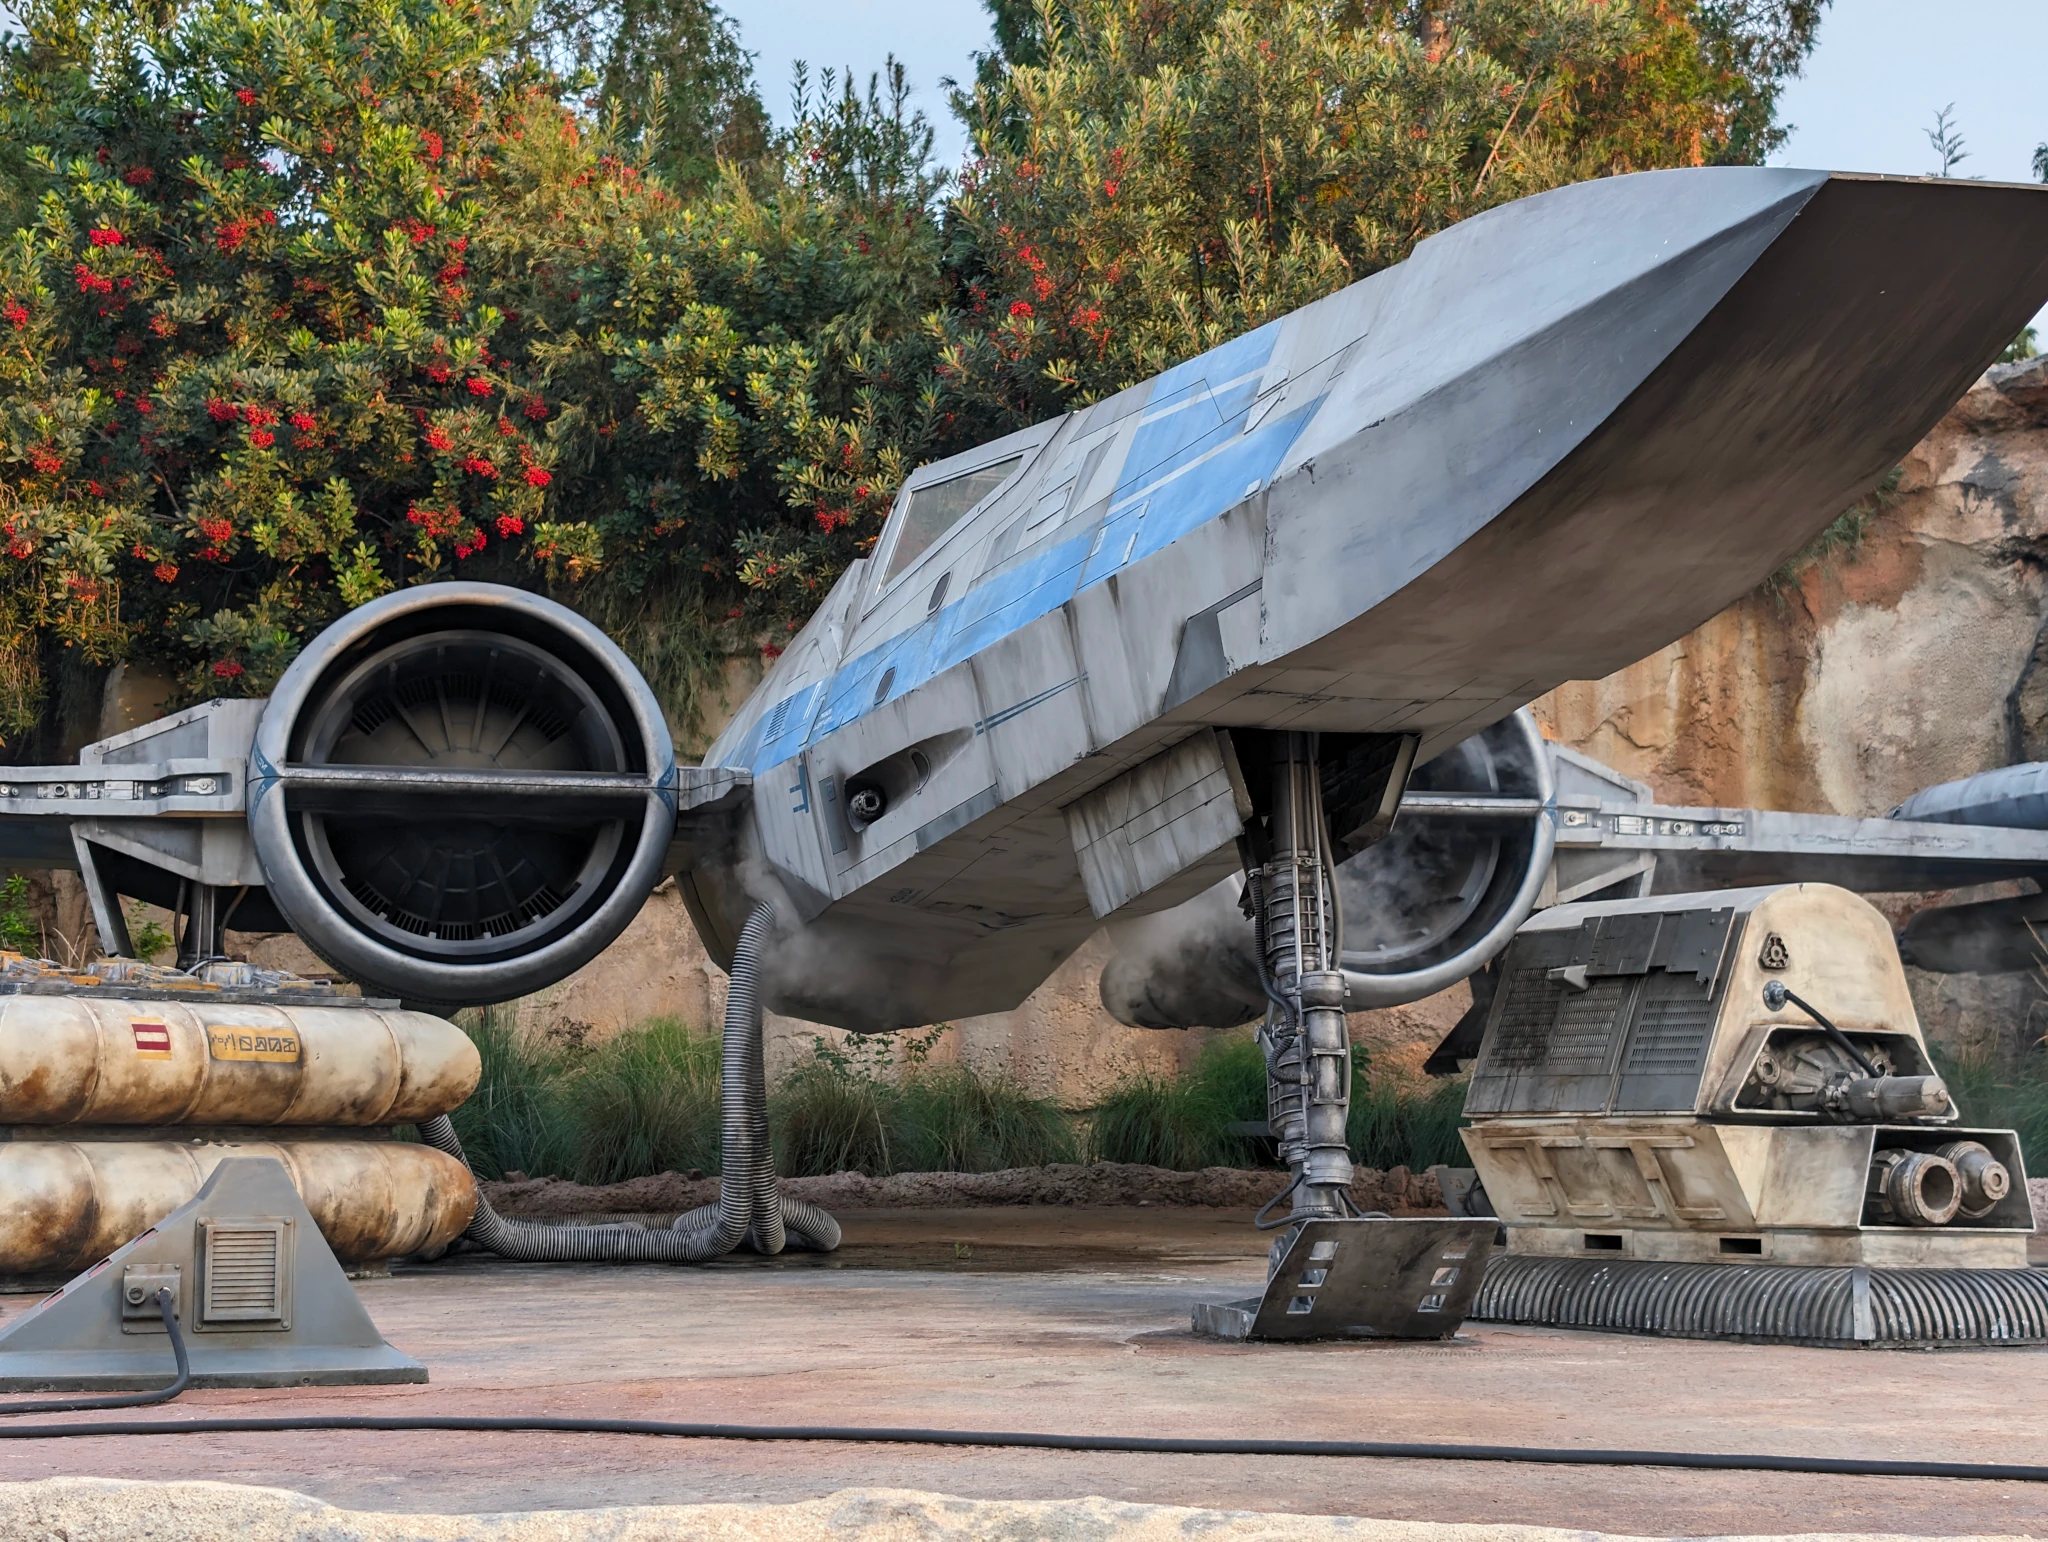 An X-Wing at Disneyland